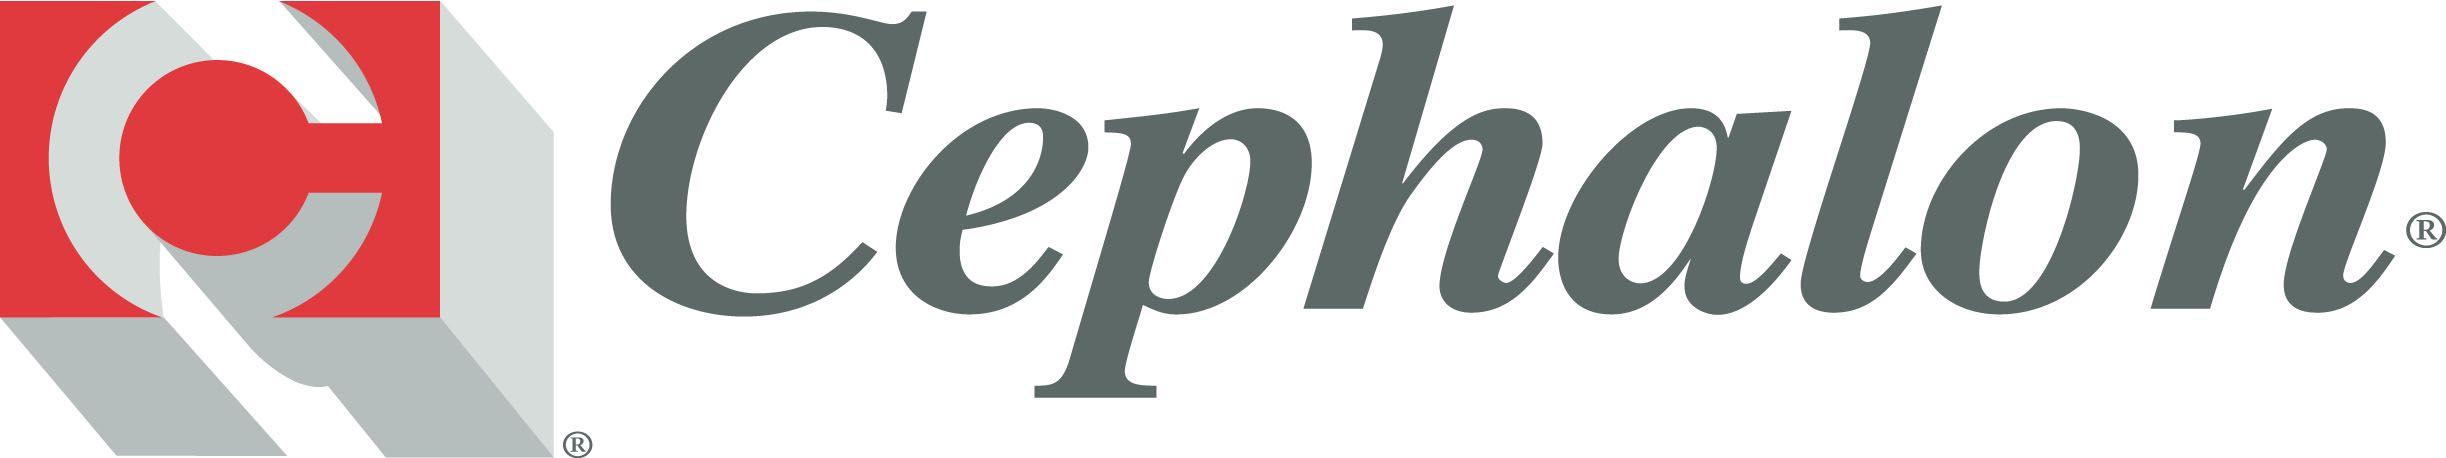 Cephalon Logo - Patent Docs: April 9, 2009